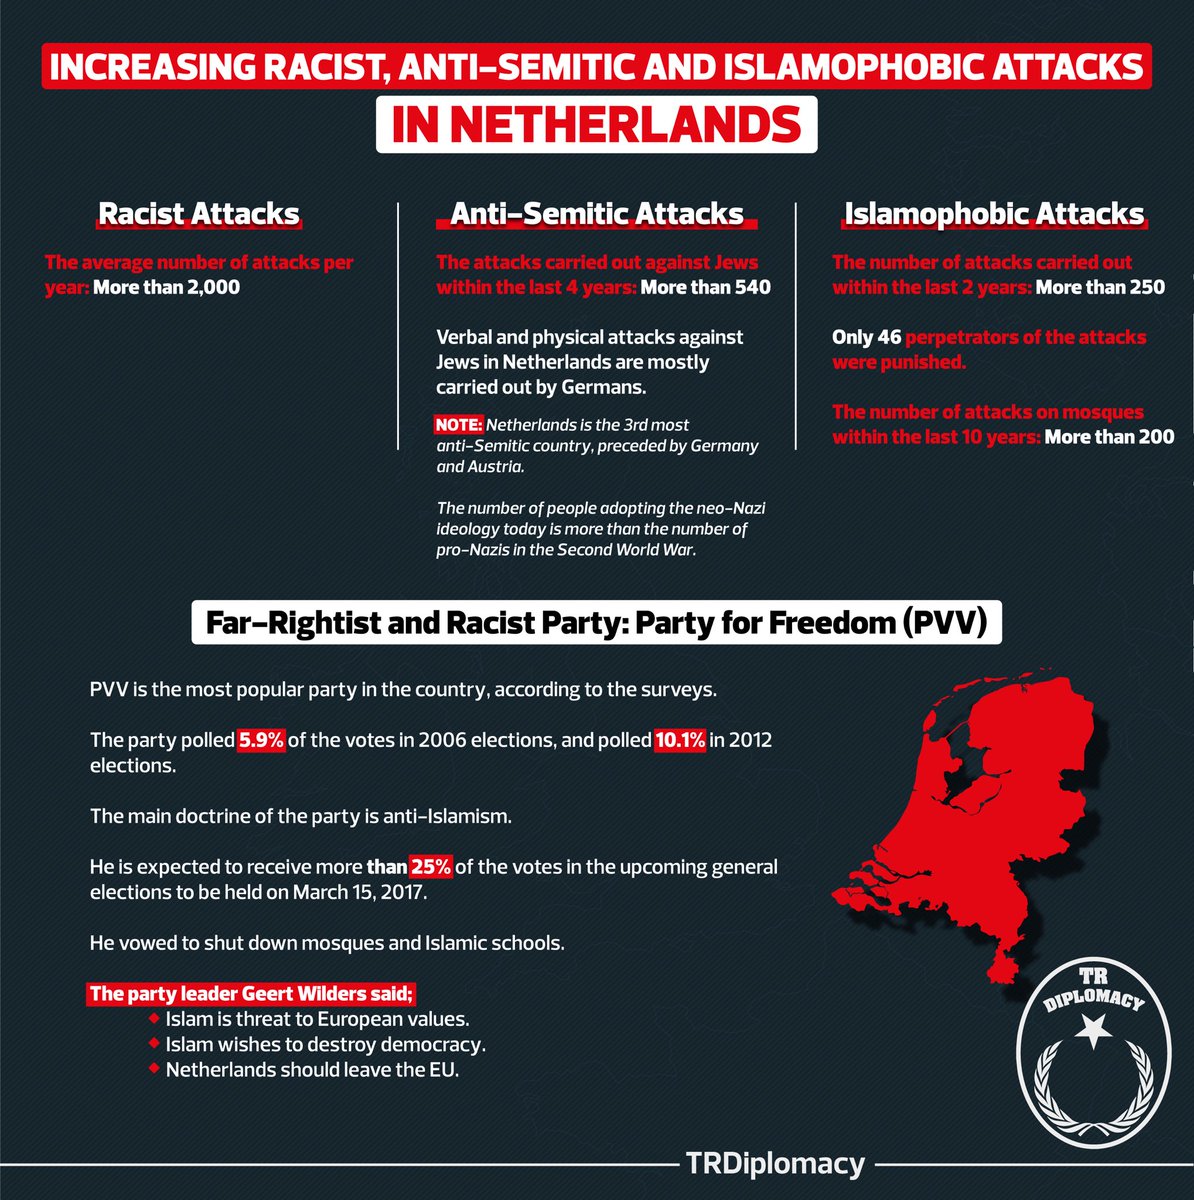 Racist, anti-Semitic and Islamophobic attacks in Netherlands puts European democracy at stake.